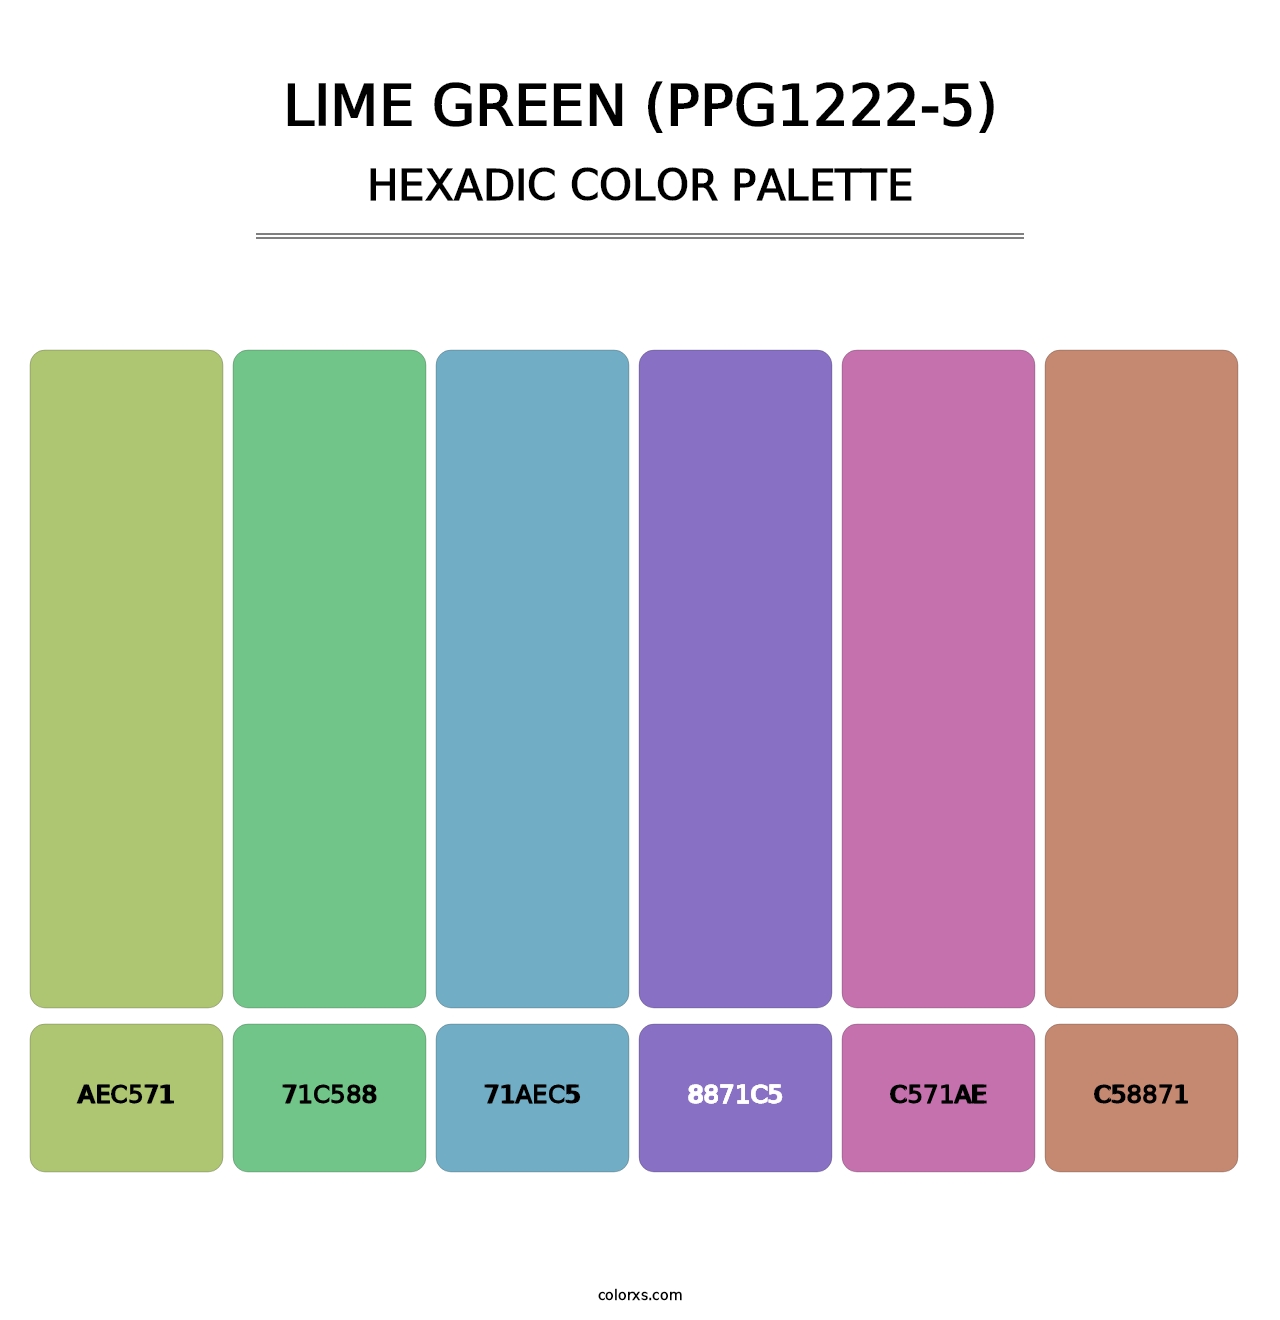 Lime Green (PPG1222-5) - Hexadic Color Palette